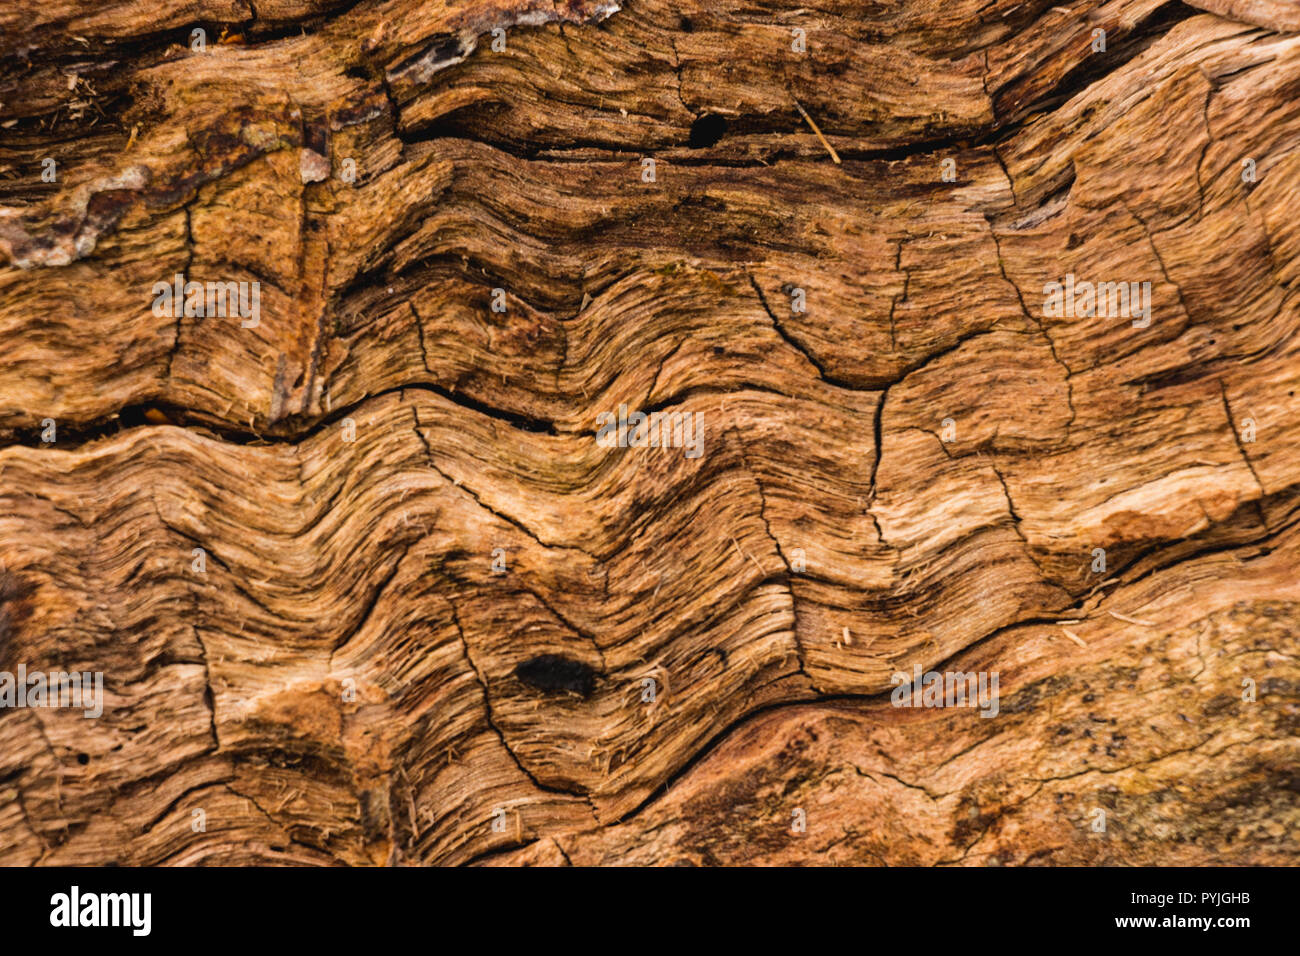 Waved tree texture - undulating wood - close-up Stock Photo